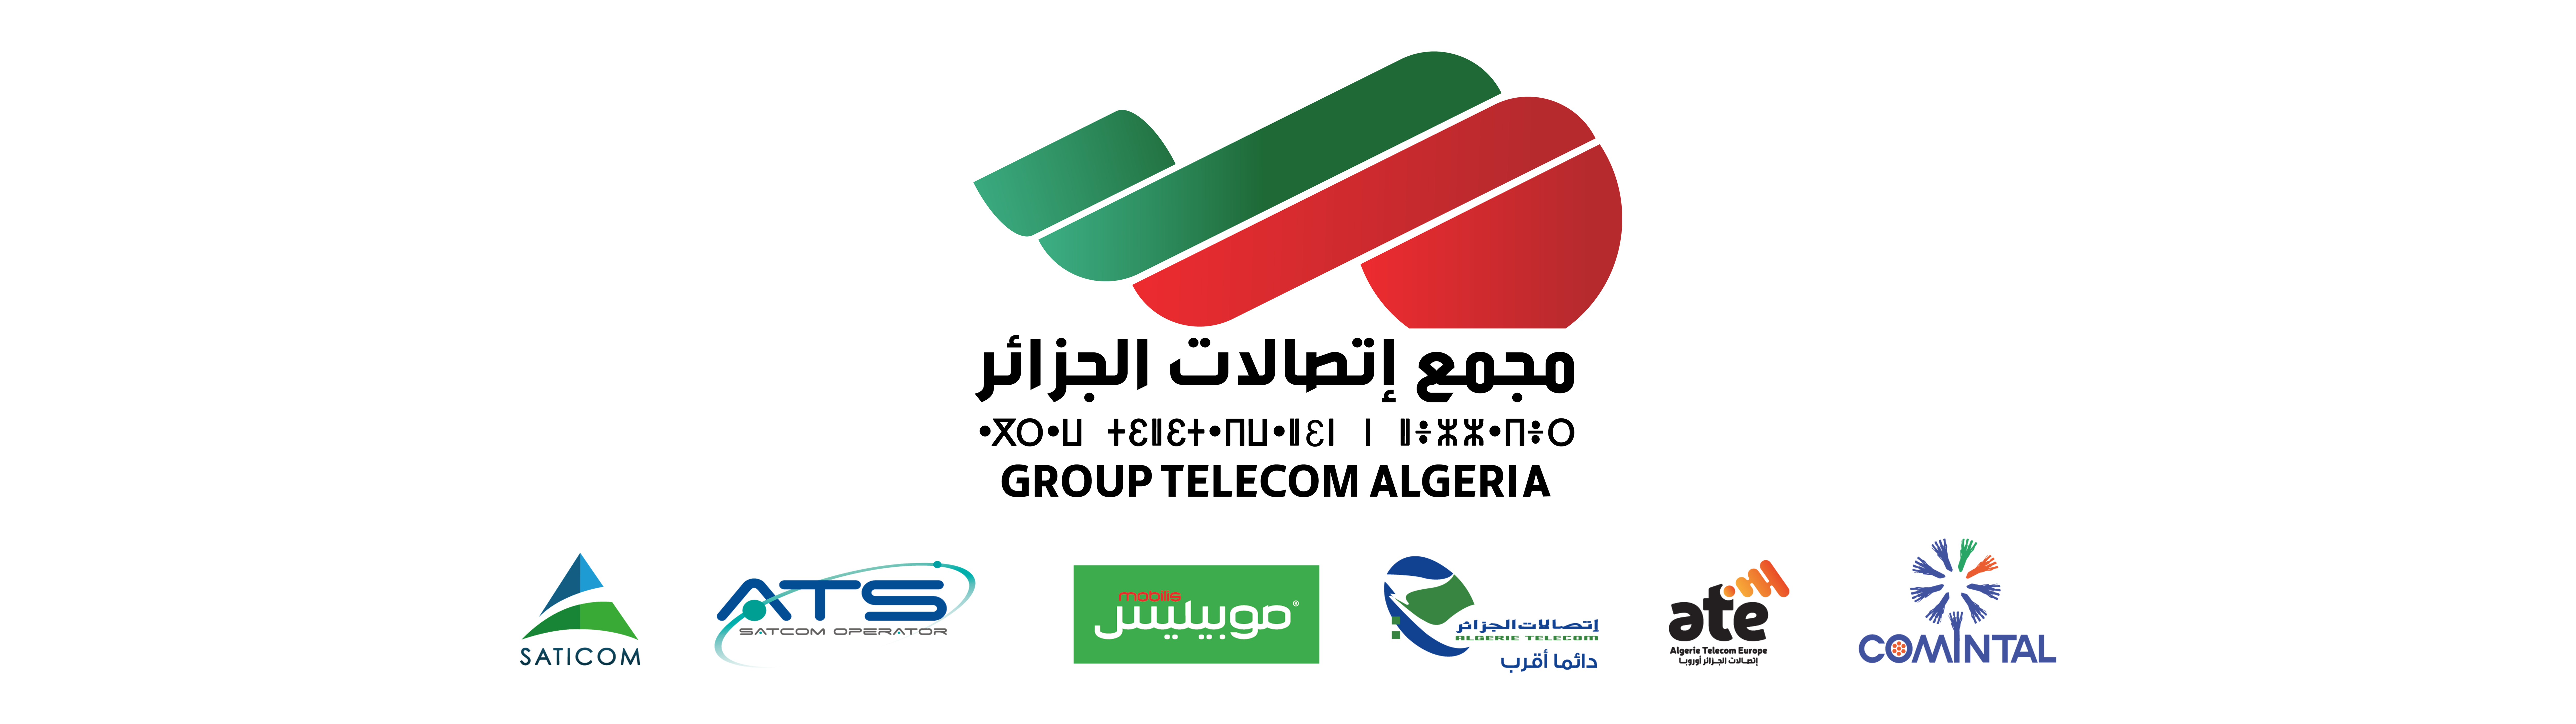 GROUPE TELECOM ALGERIE INTRODUCTION